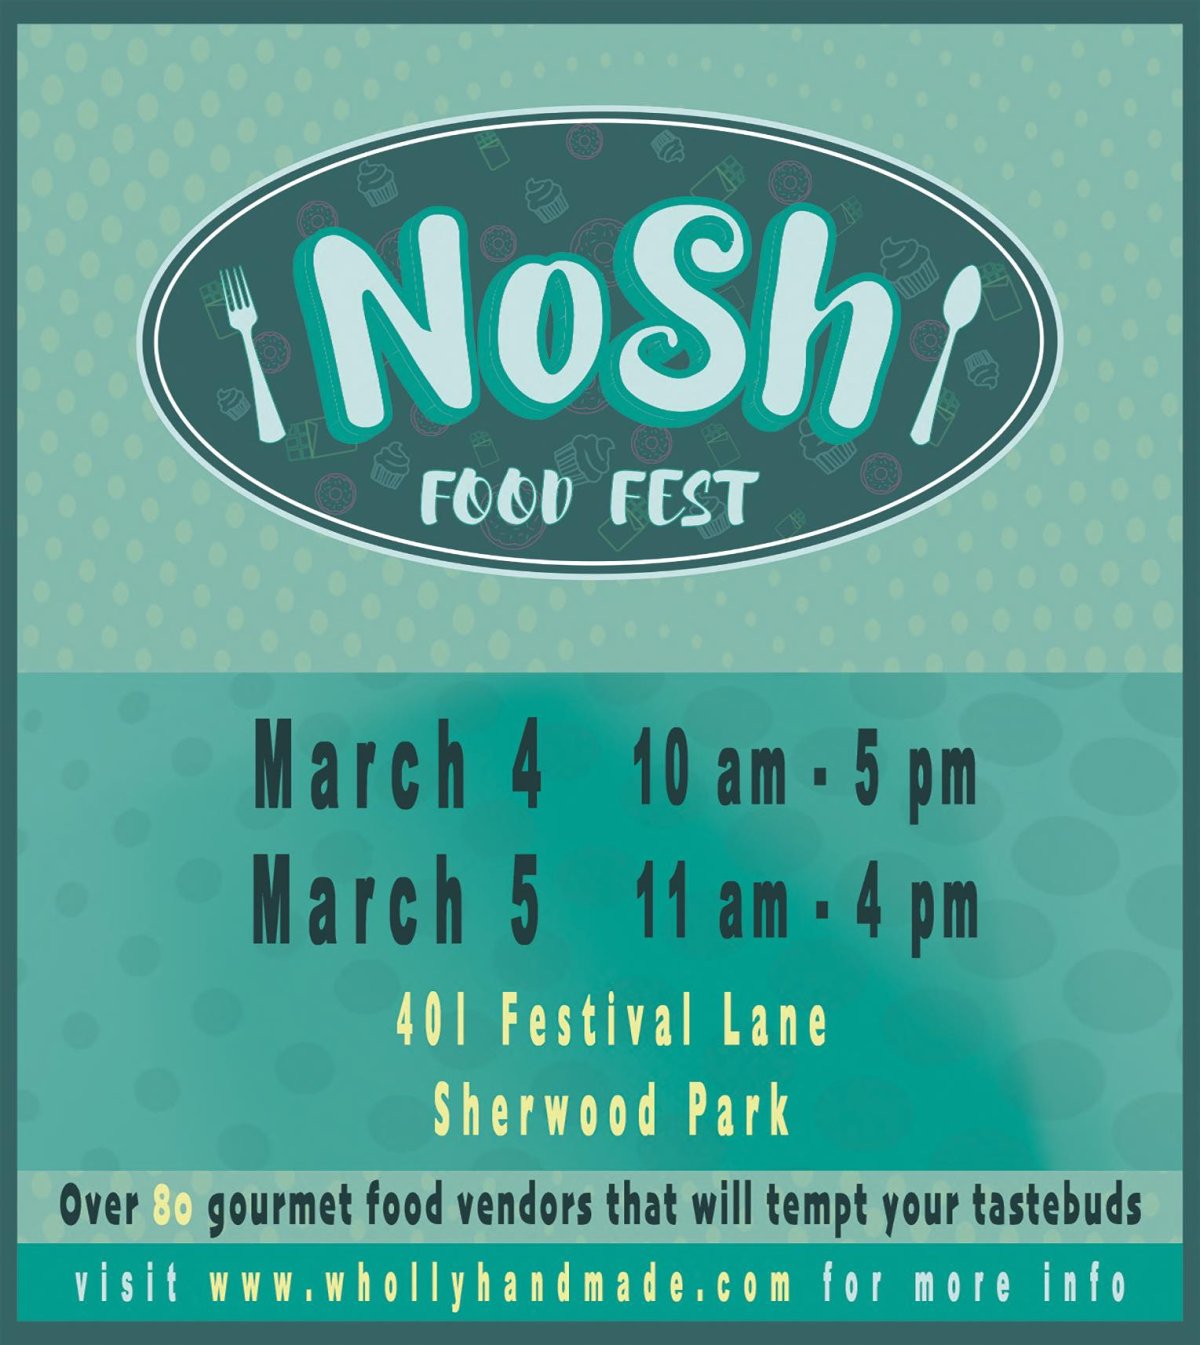 NOSH Food Fest GlobalNews Events